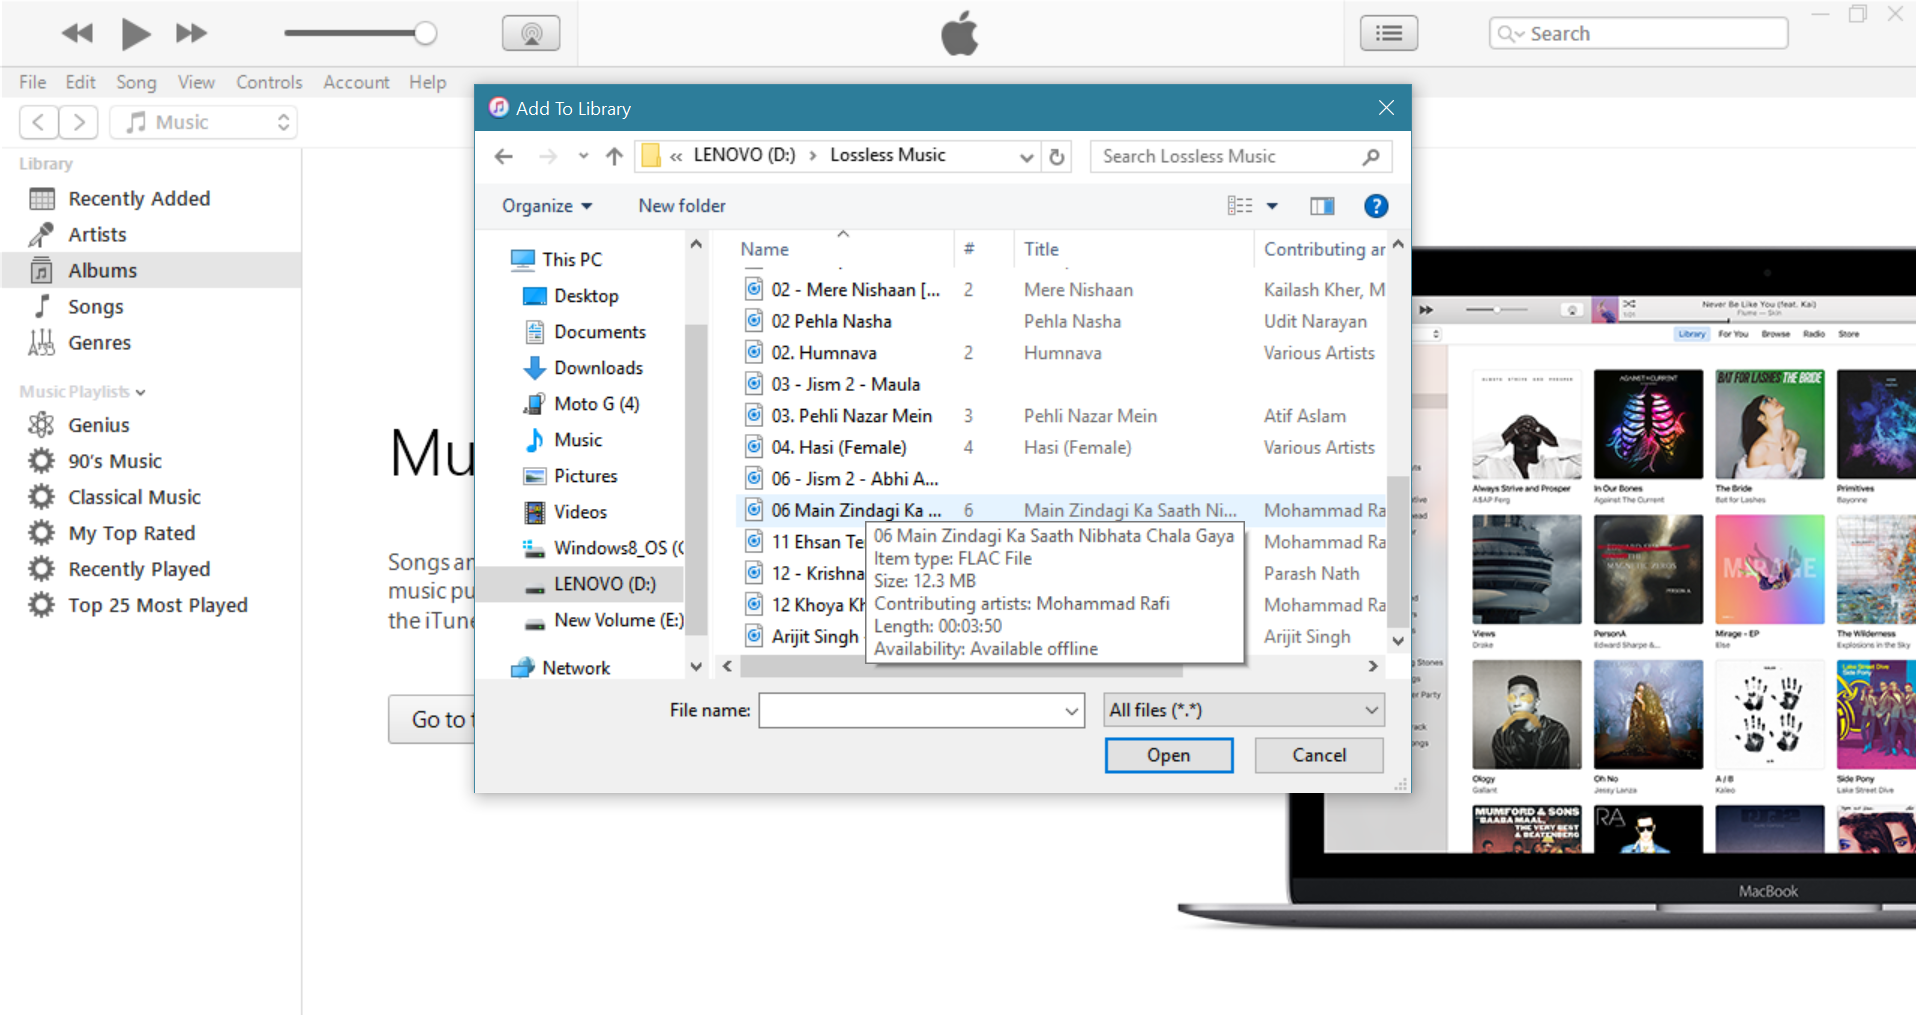 itunes download for windows 10 latest version free 64 bit